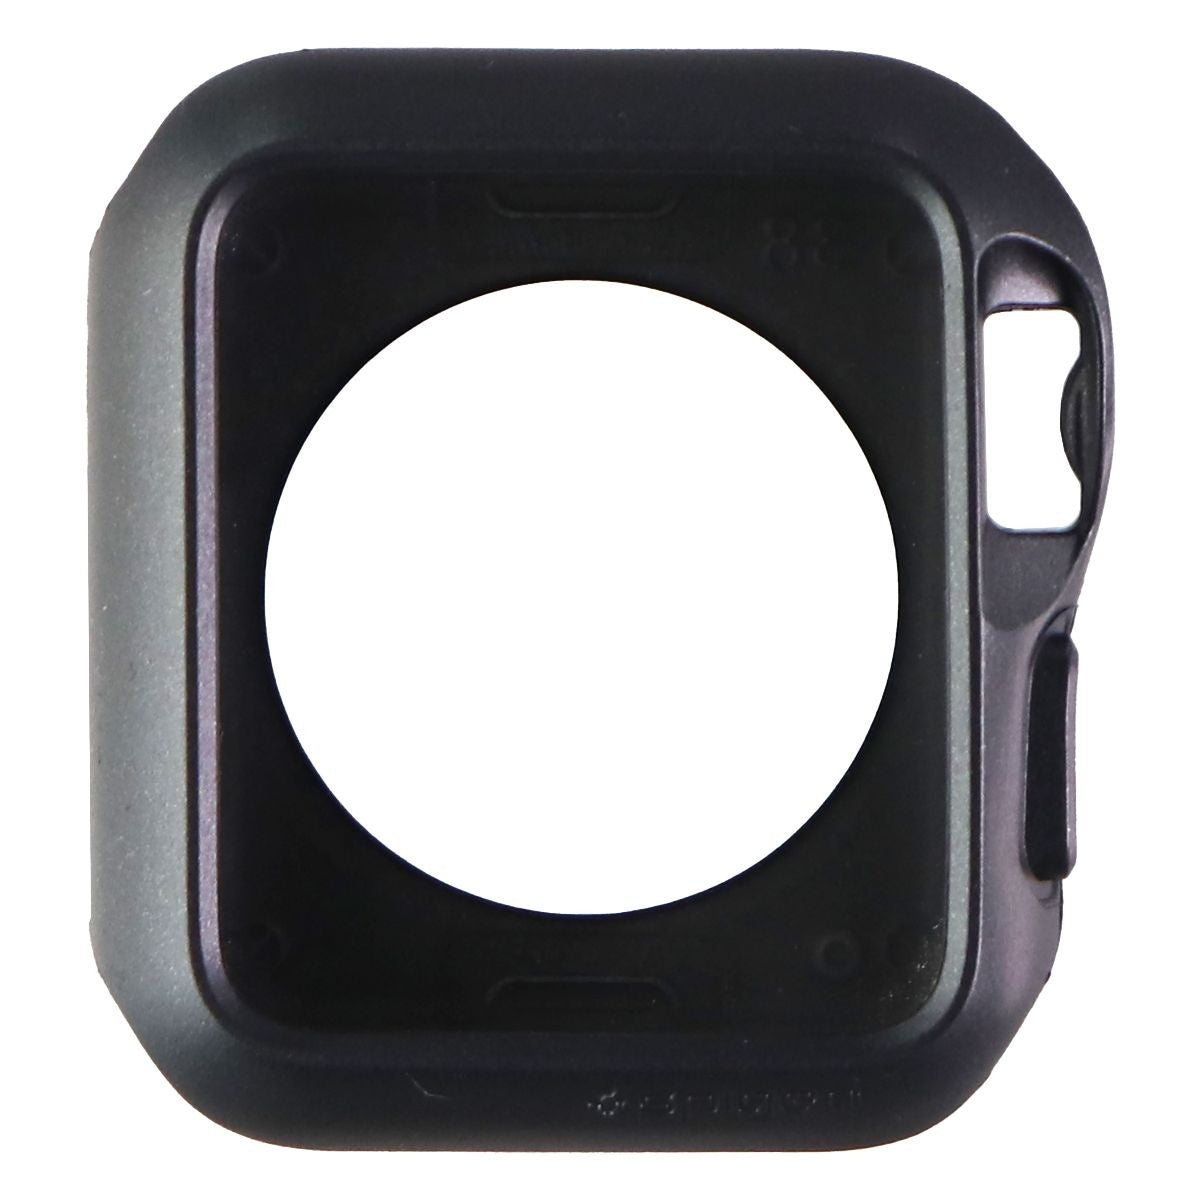 Spigen Slim Armor Case for Apple Watch Series 3 / 2 / 1 - Space Gray Smart Watch Accessories - Smart Watch Cases Spigen    - Simple Cell Bulk Wholesale Pricing - USA Seller